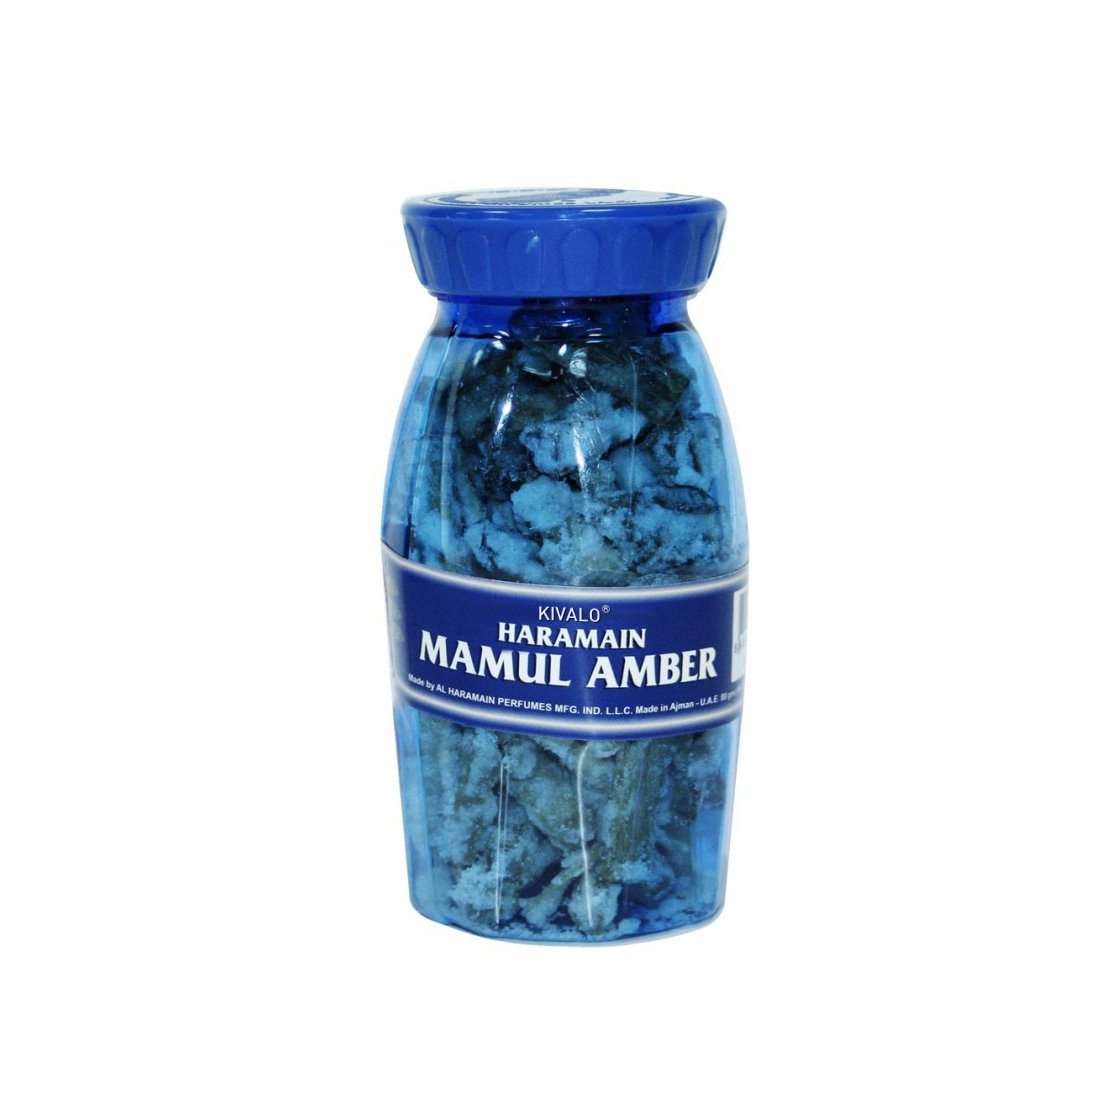 Al Haramain Mamul Amber Pure Original Bukhoor Incense Sticks - 80g